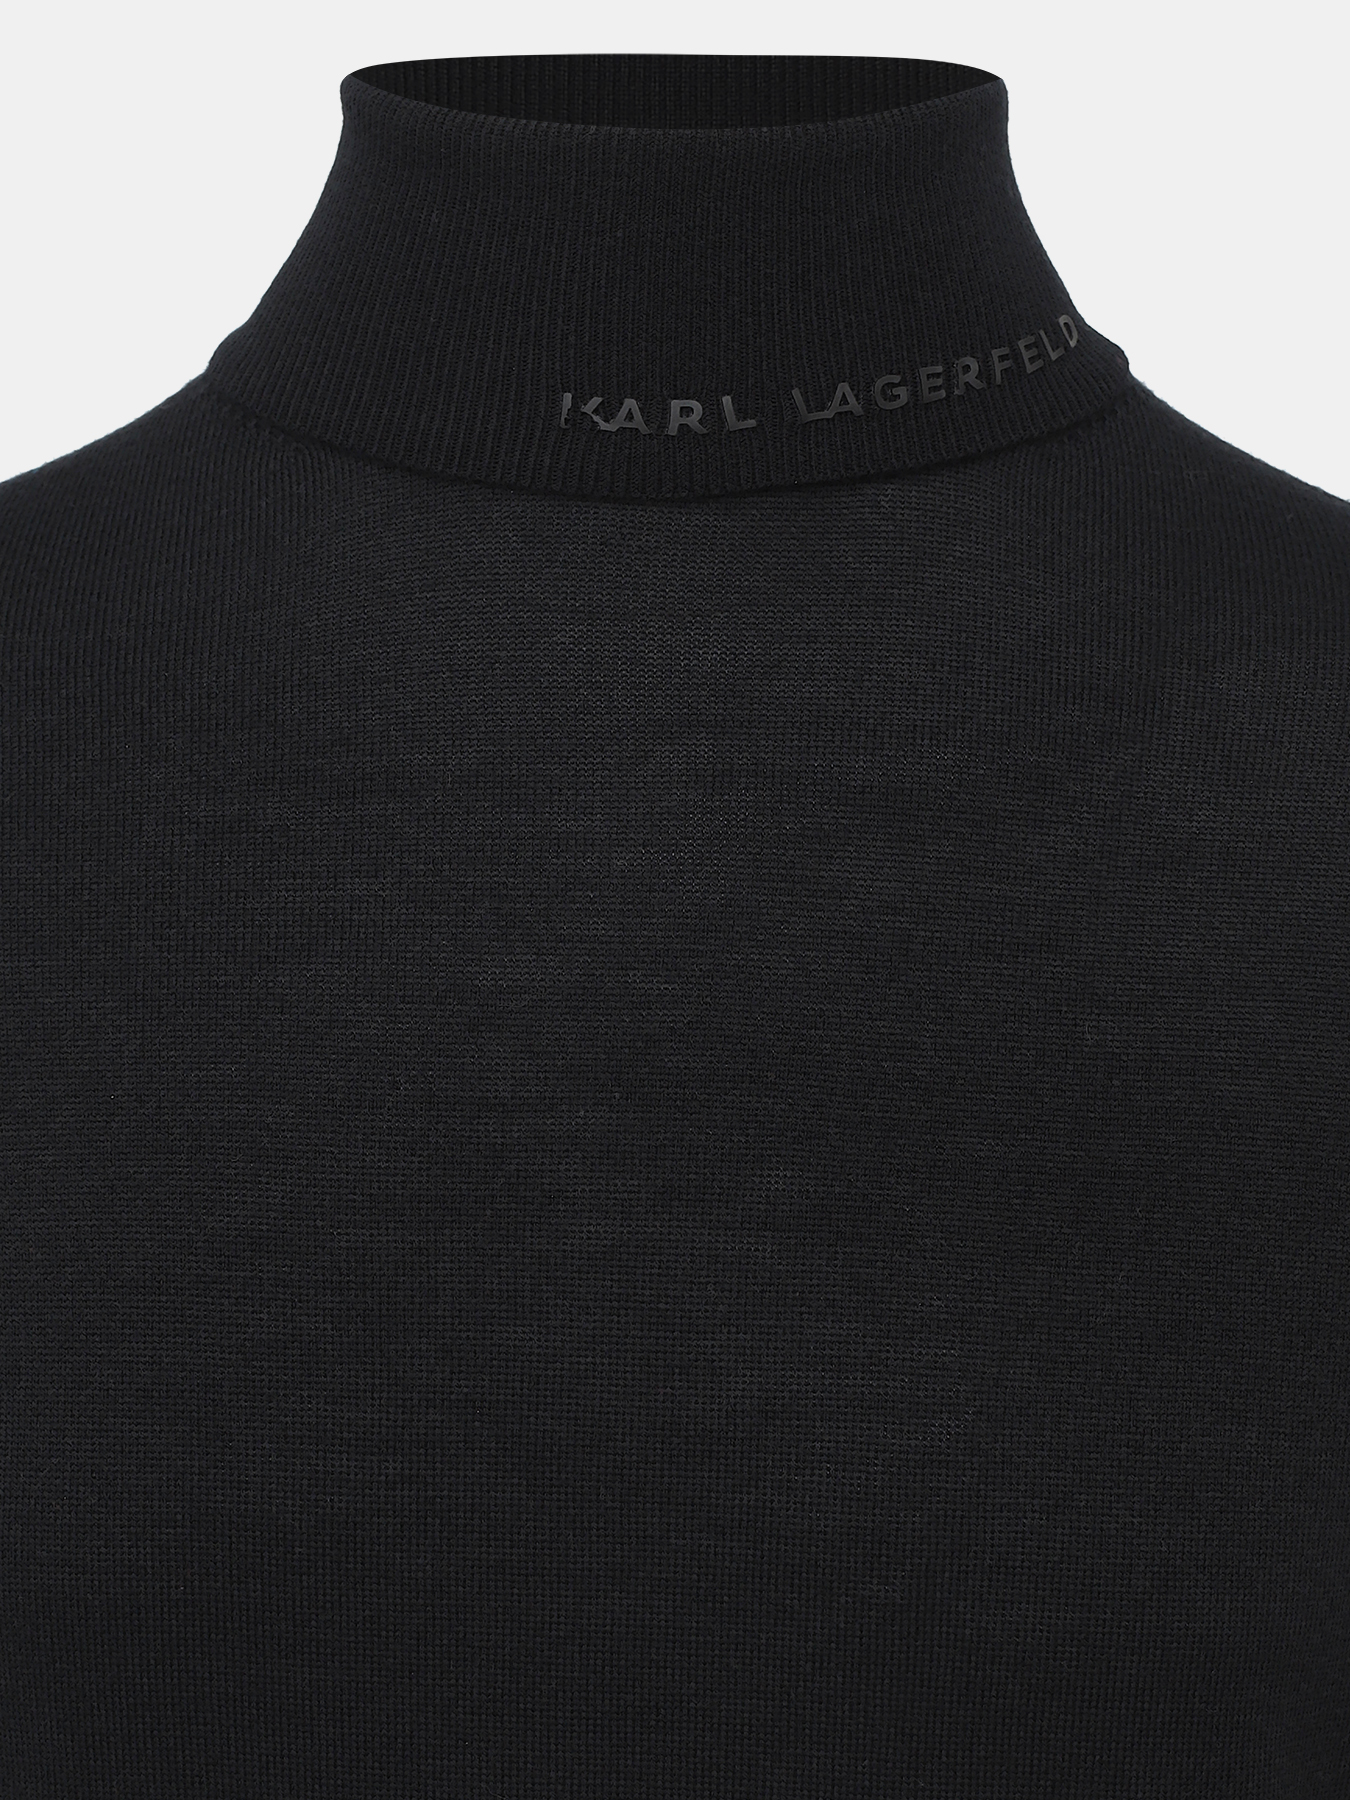 Свитер Karl Lagerfeld 420304-043, цвет черный, размер 48-50 - фото 2